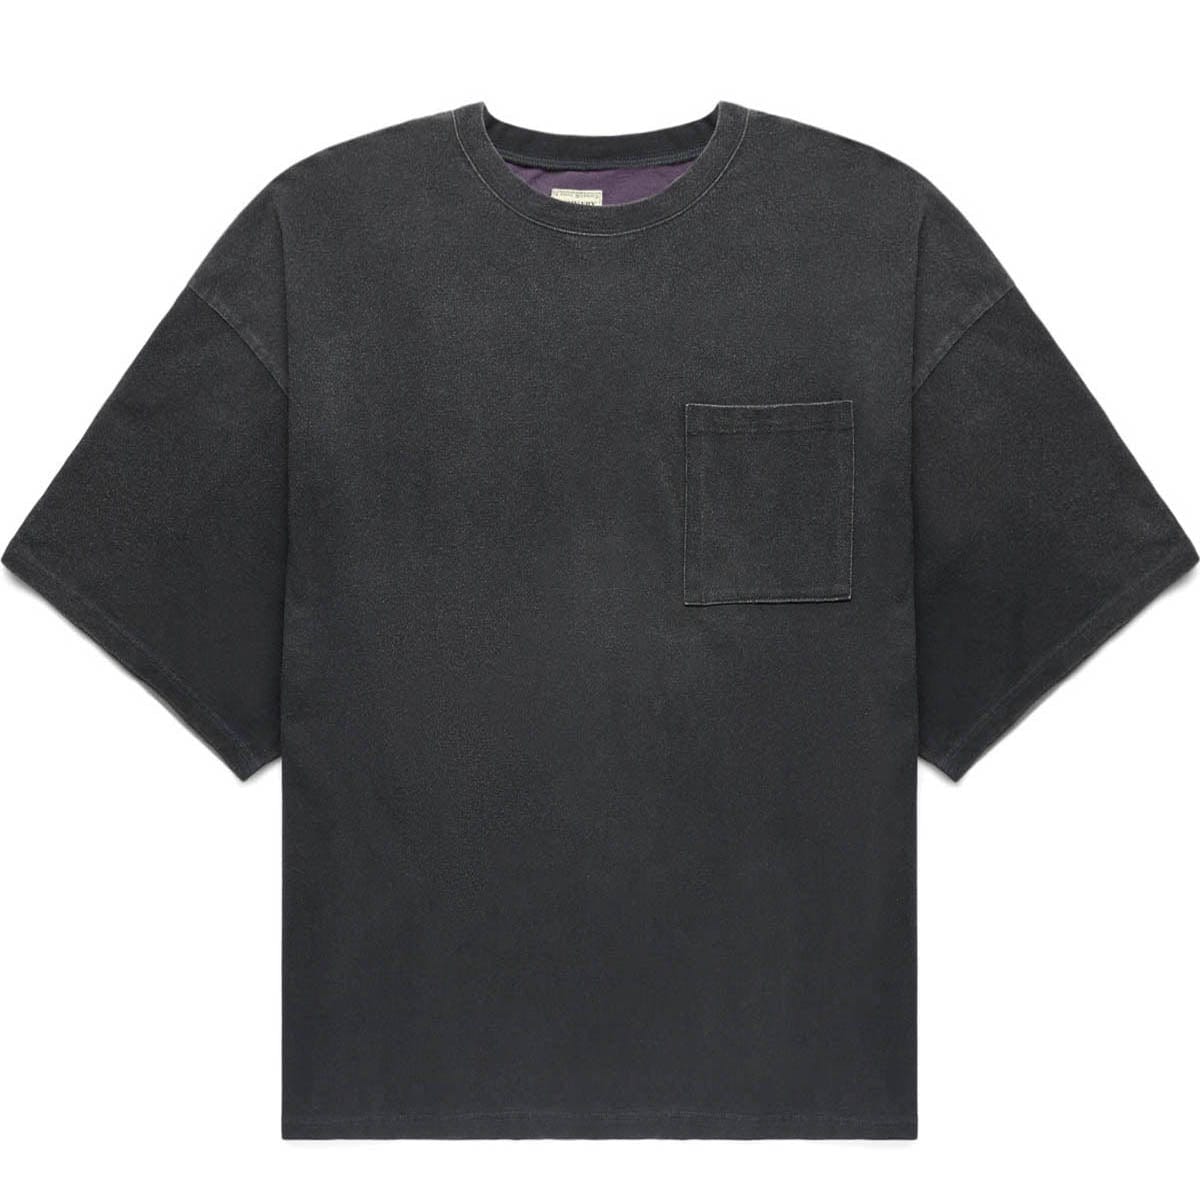 Kapital T-Shirts BLK/PURPLE / O/S JERSEY 2TONES BIG POCKET T (BONE)